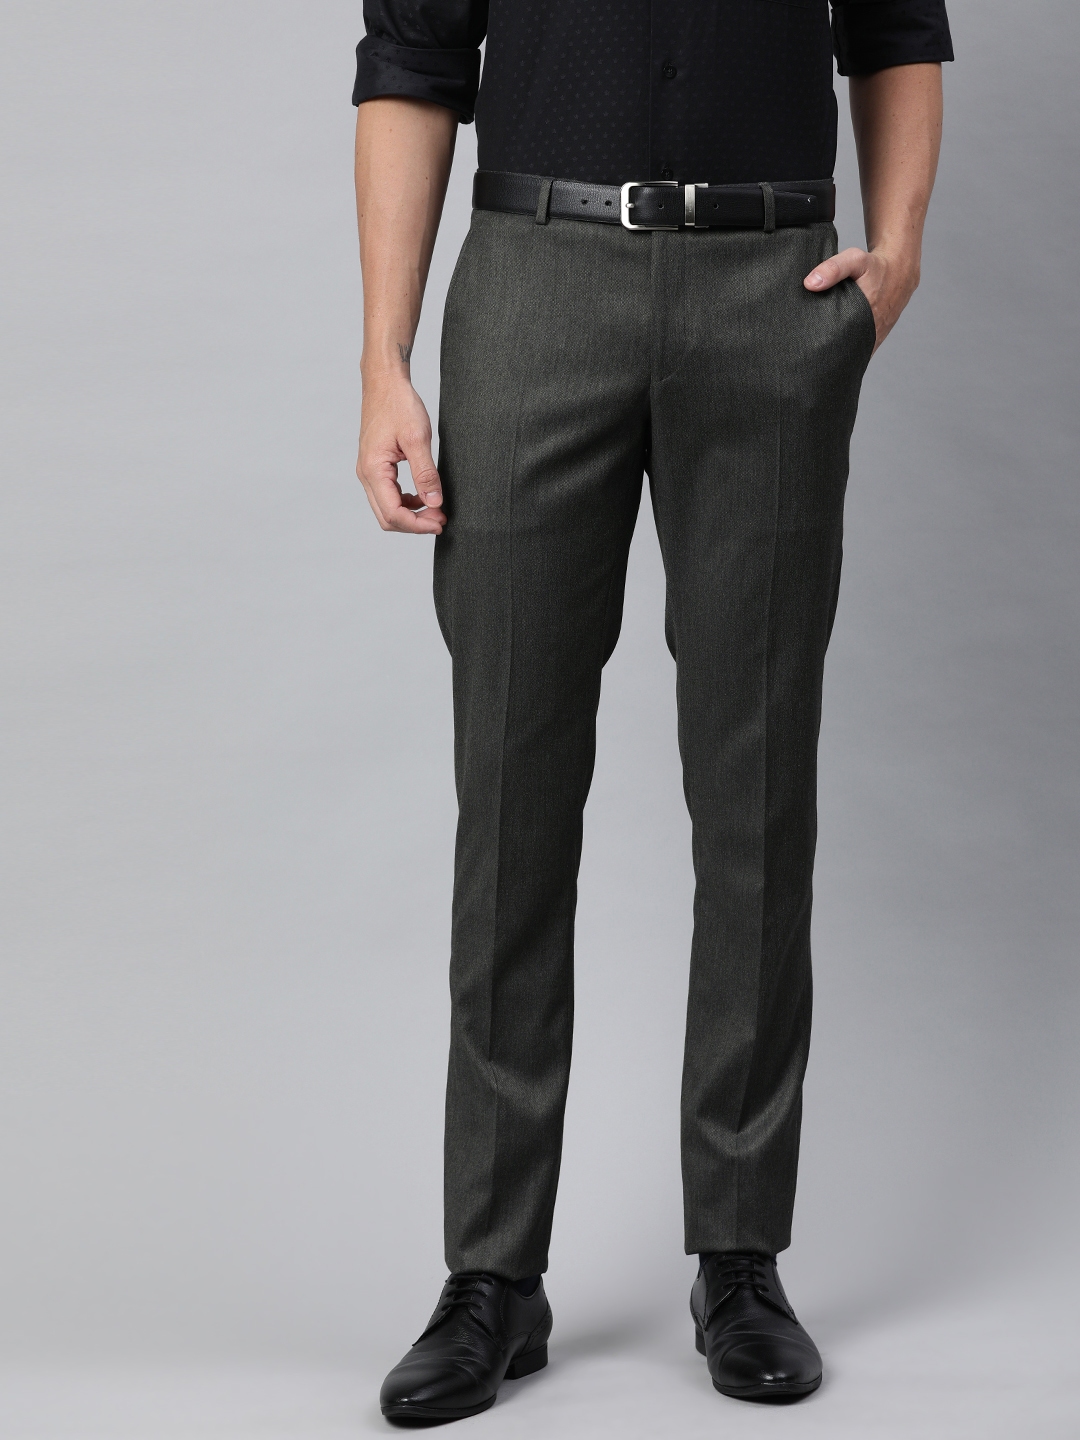 Buy SUITLTD Men Charcoal Grey Slim Fit Solid Formal Trousers - Trousers ...